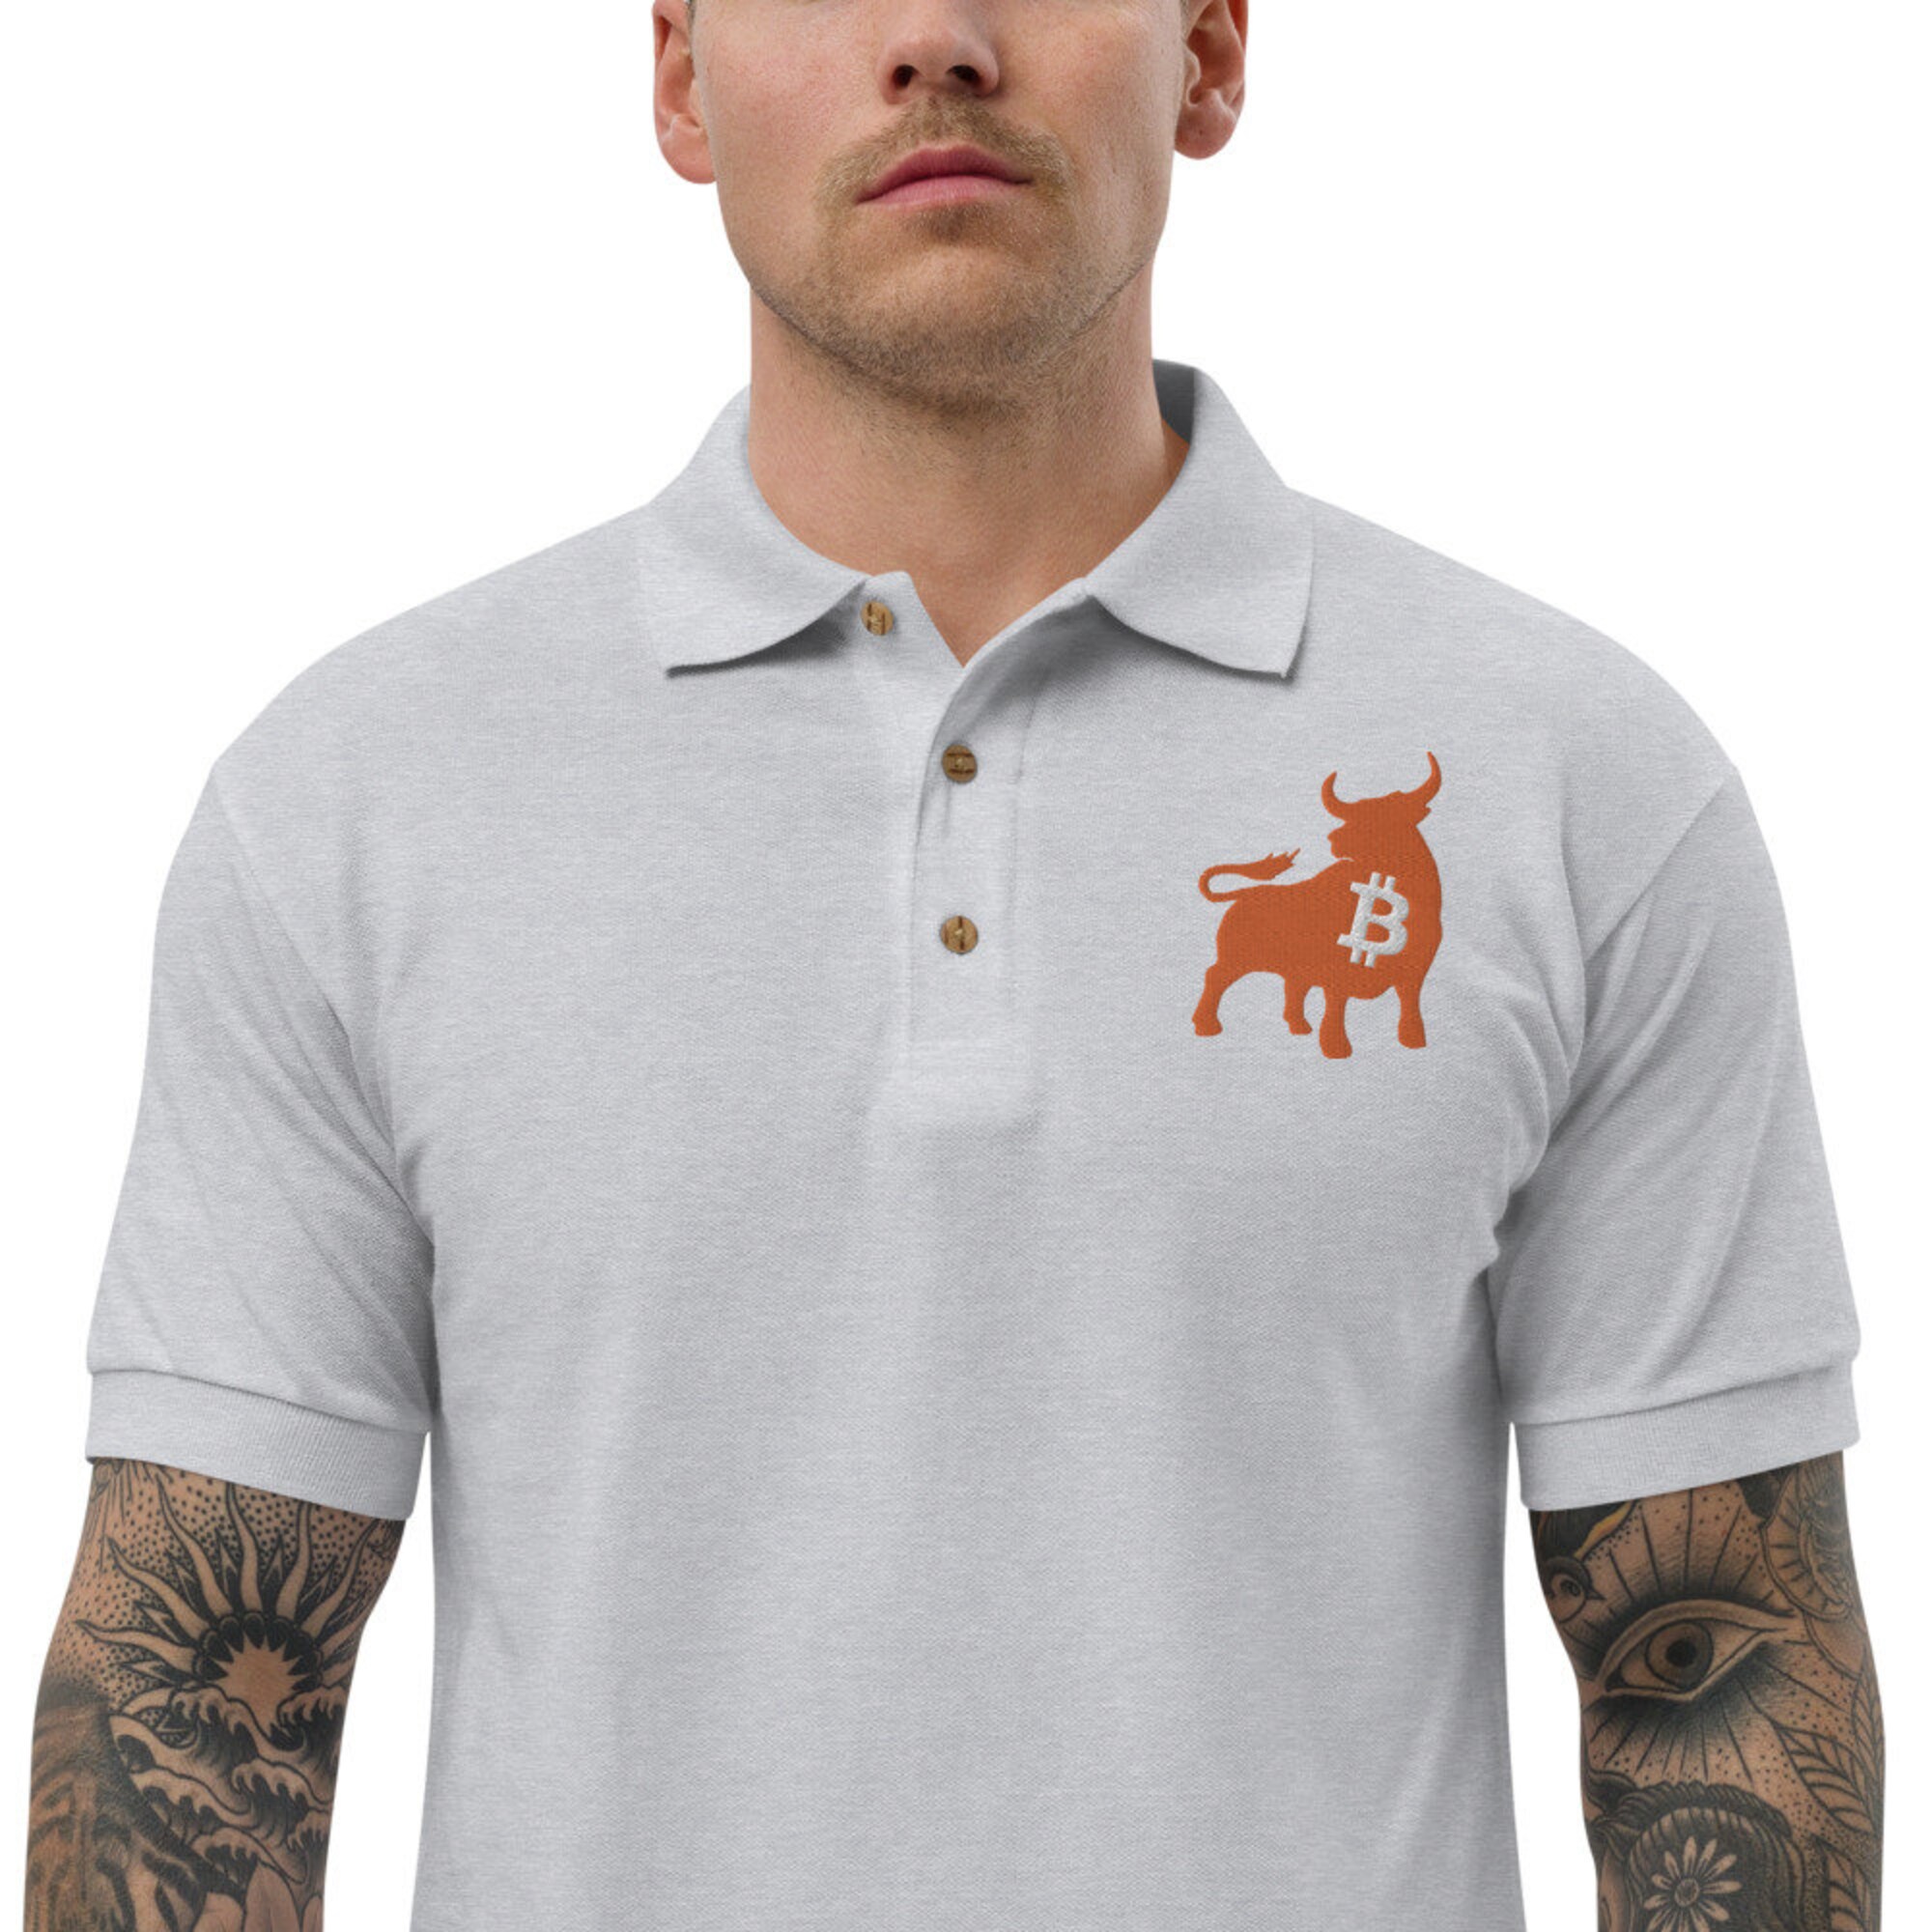 Bullish Bitcoin Embroidered Polo Shirt - BTC Bull